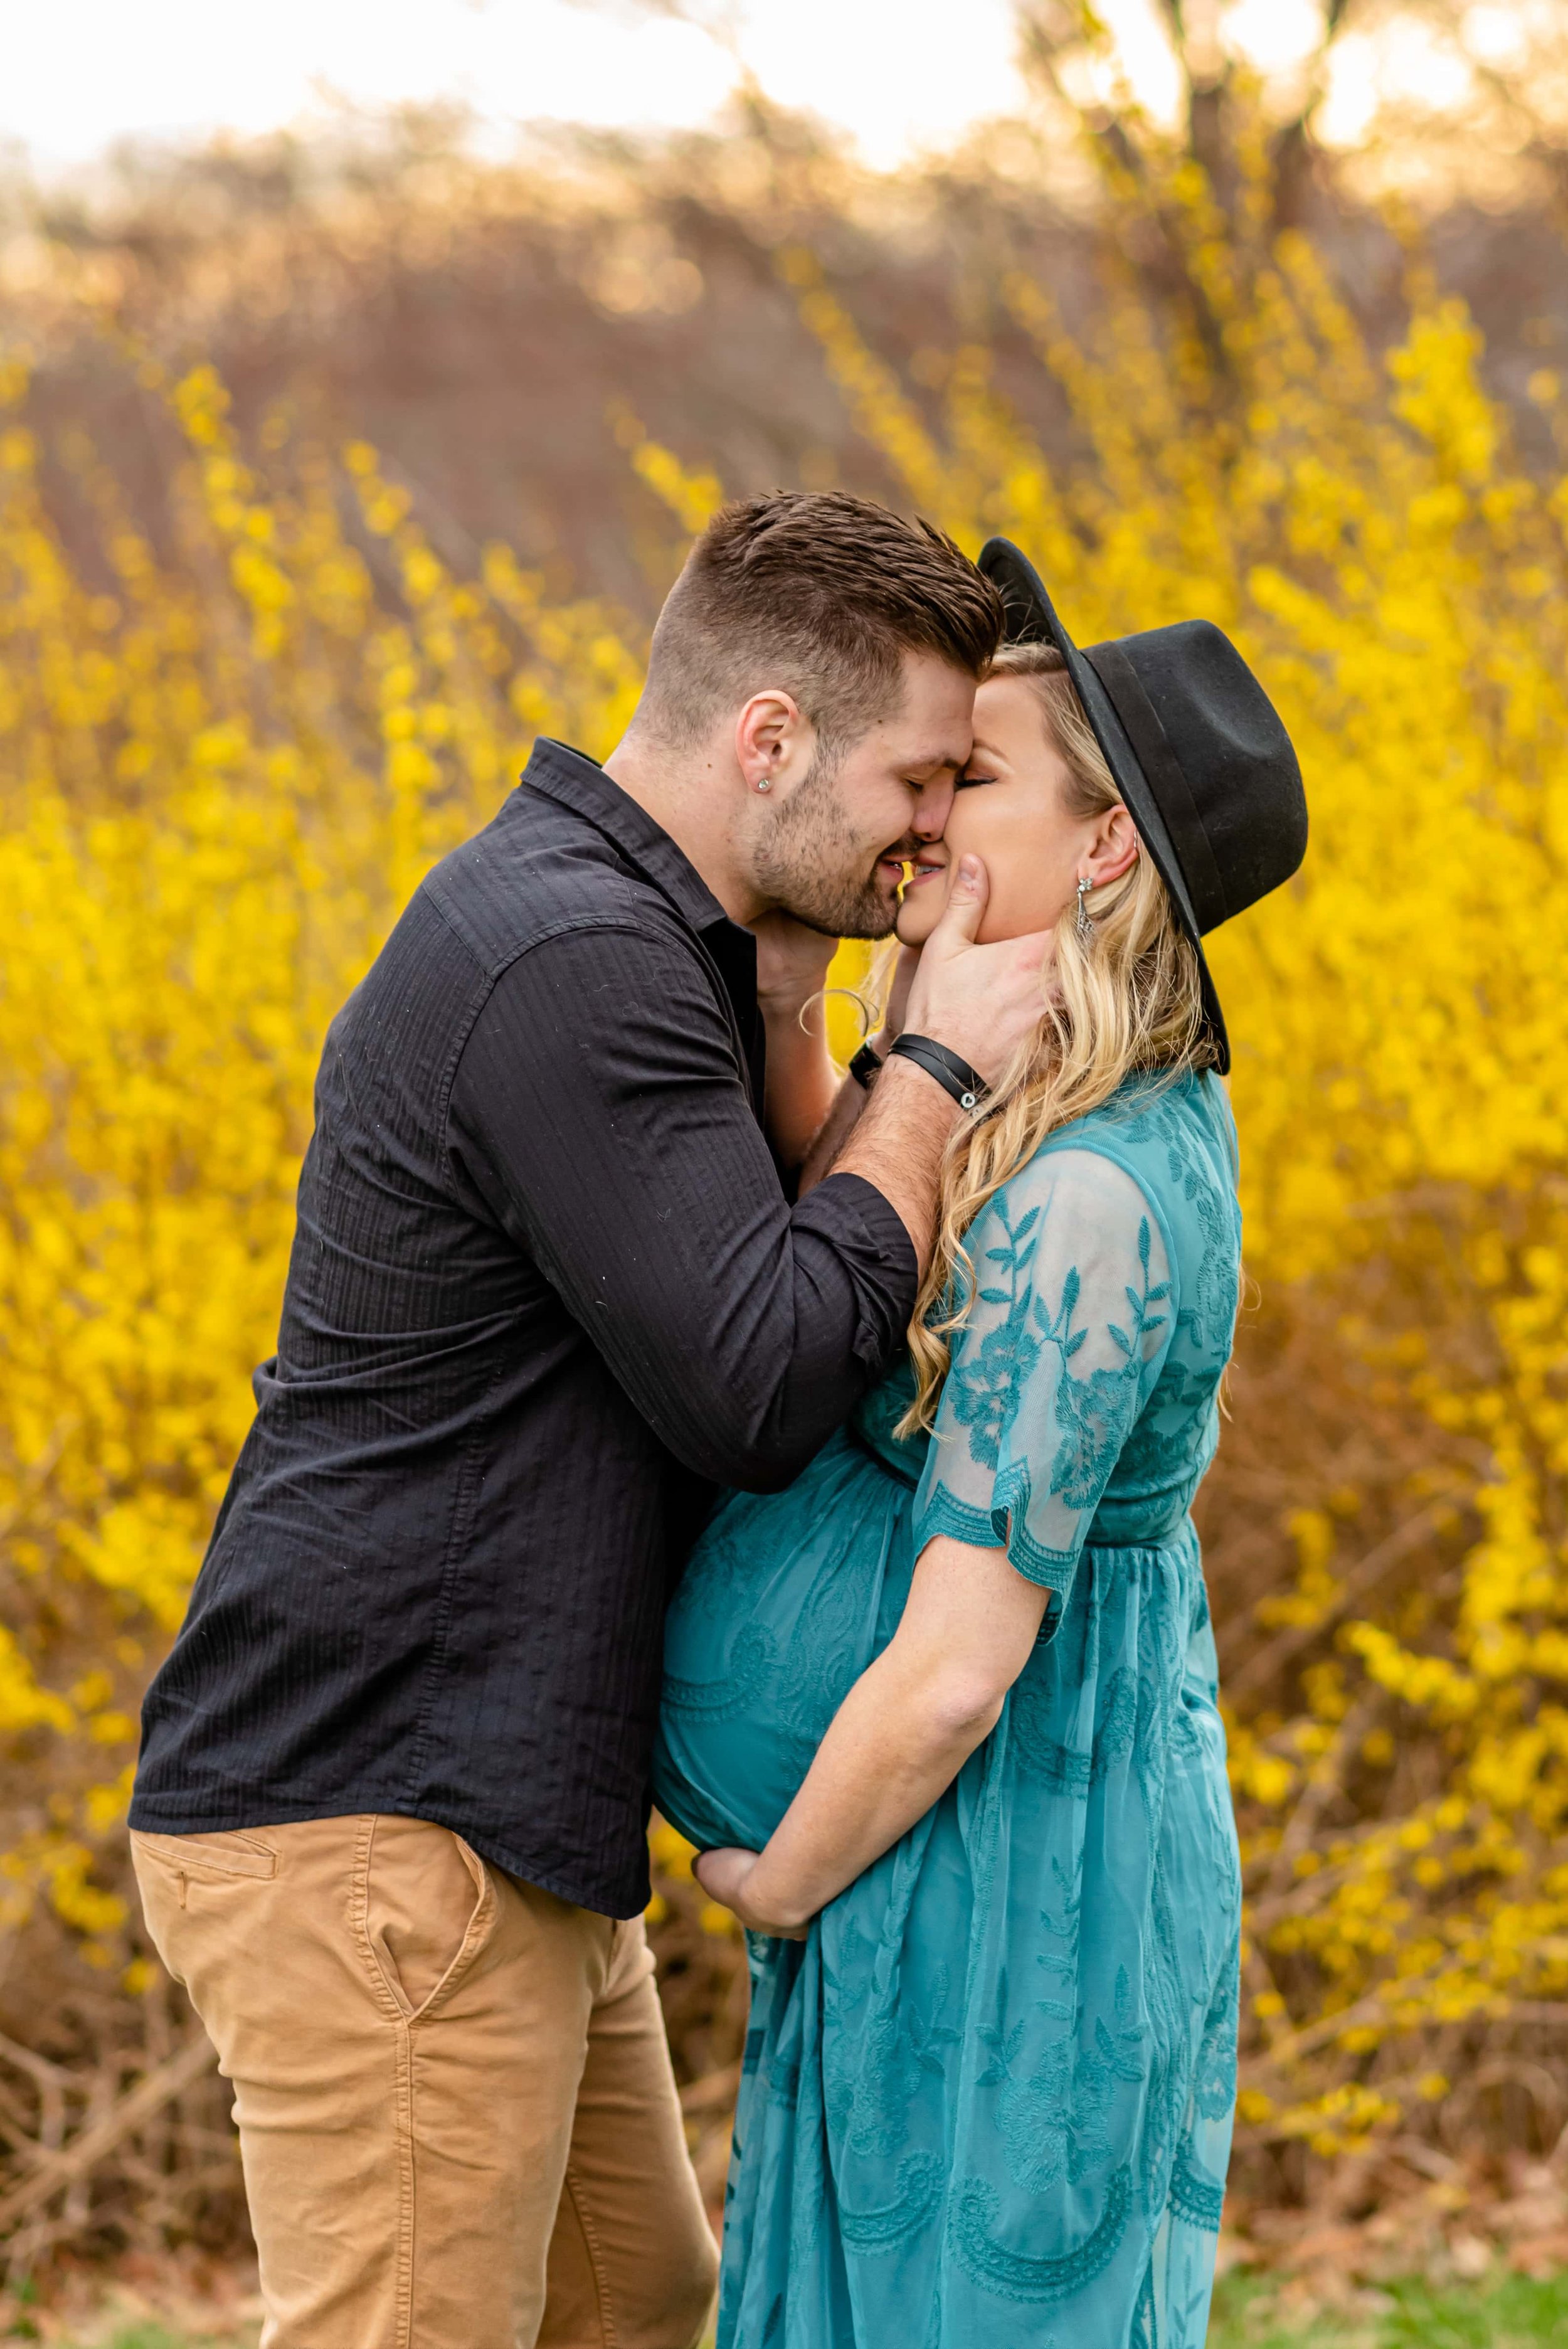 Maryland Maternity Photoshoot with expecting couple kissing